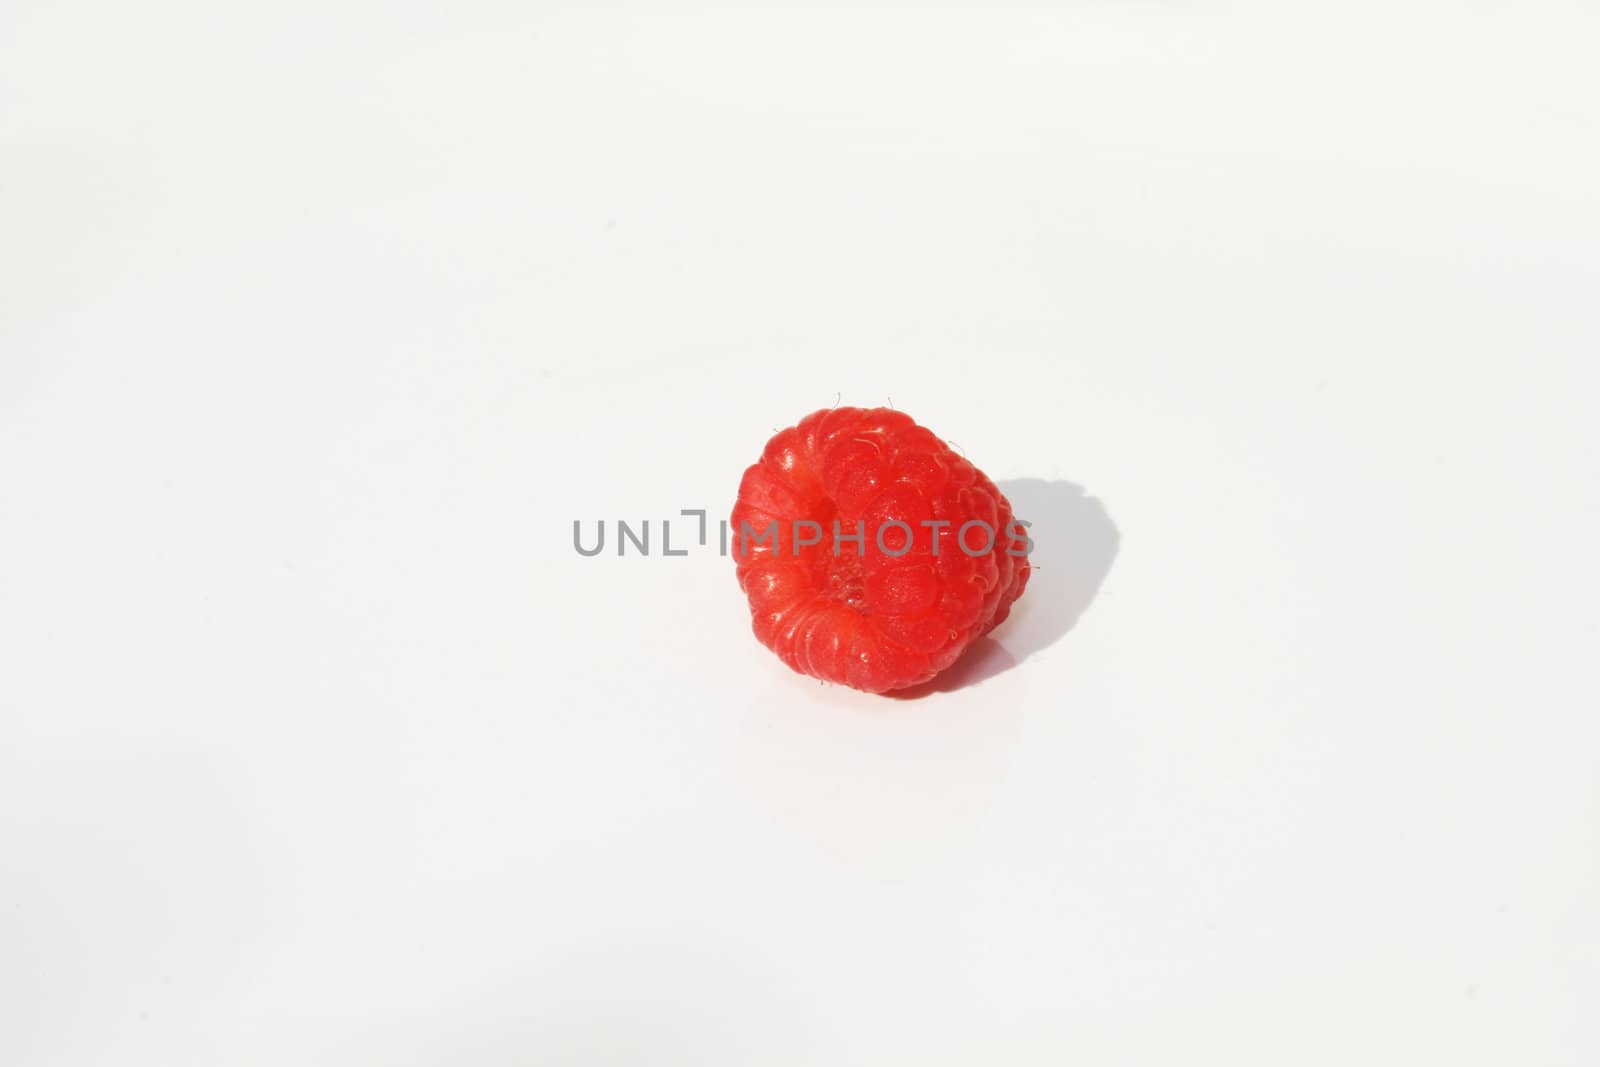 Single raspberry against white background